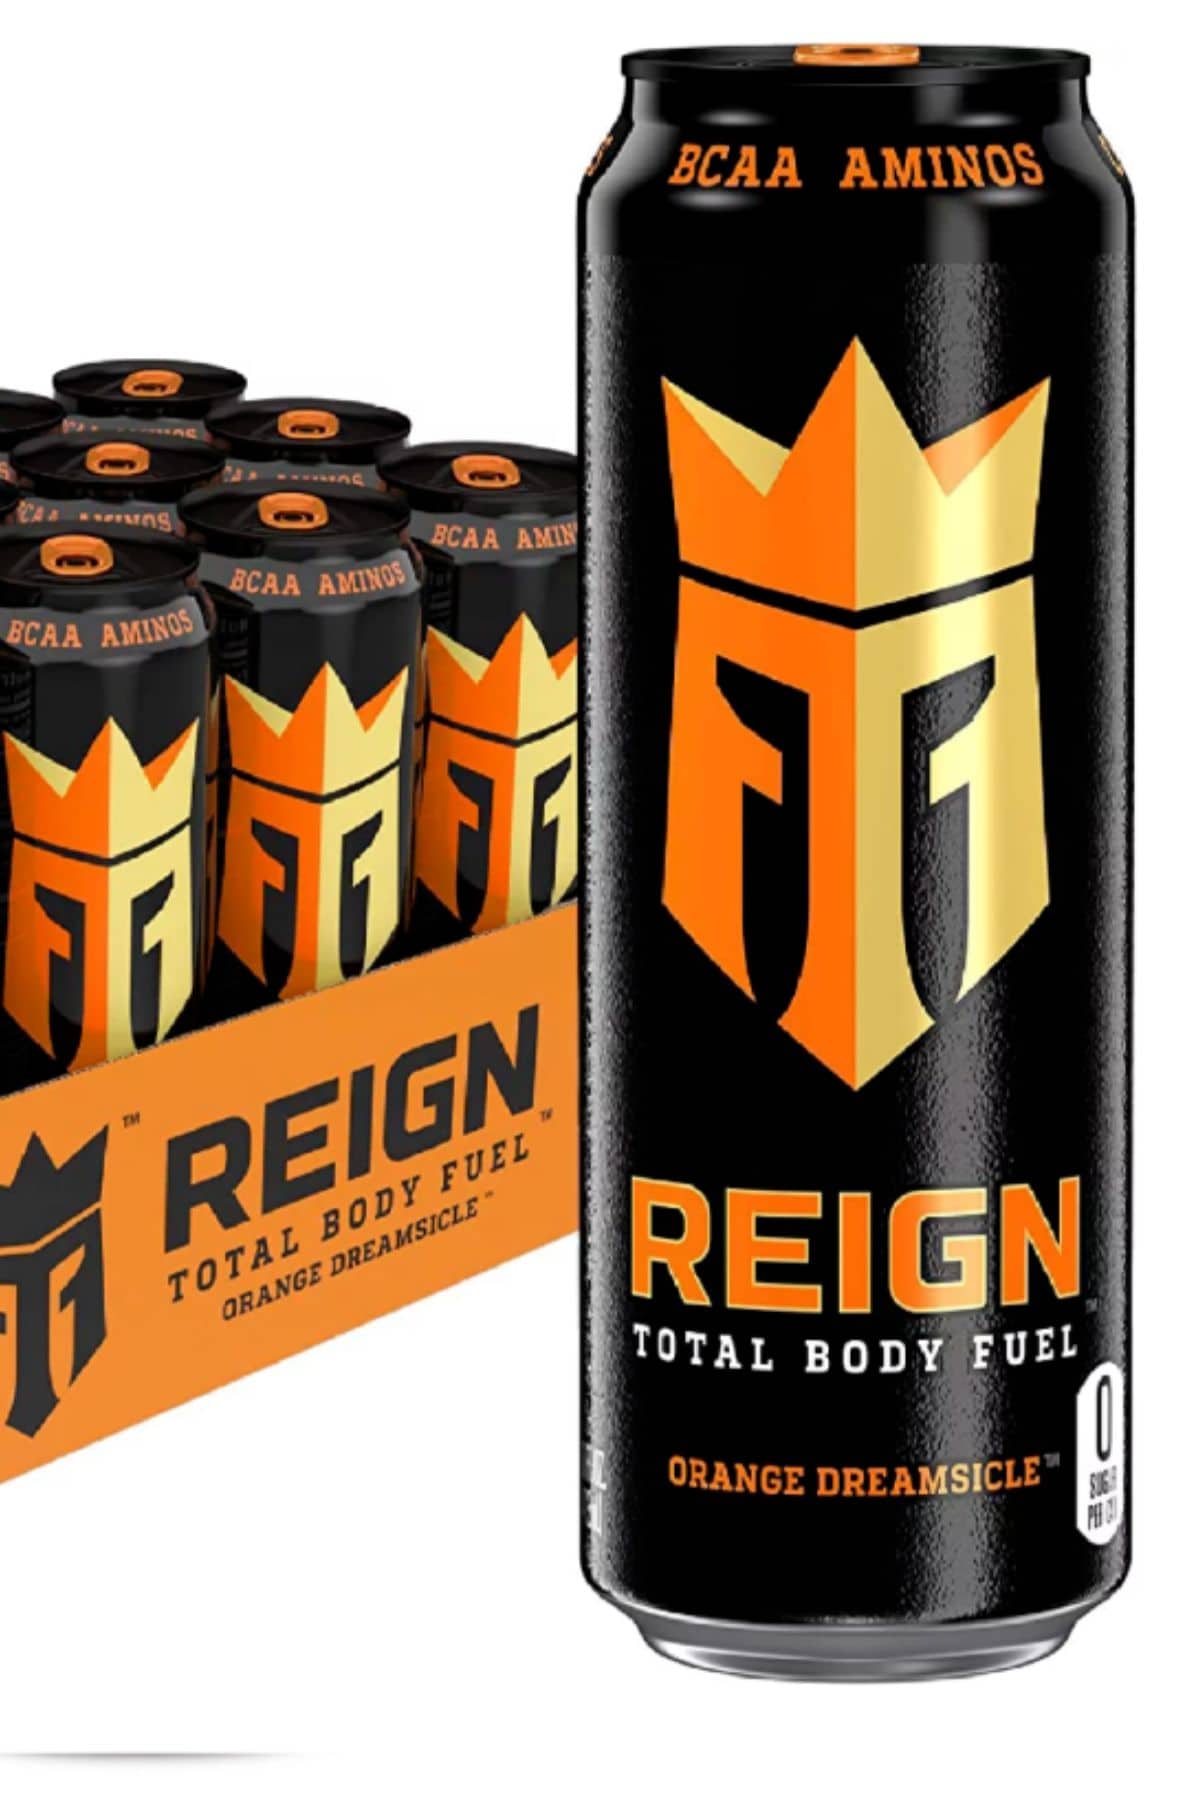 Reign total body fuel drink orange dreamsicle flavor.